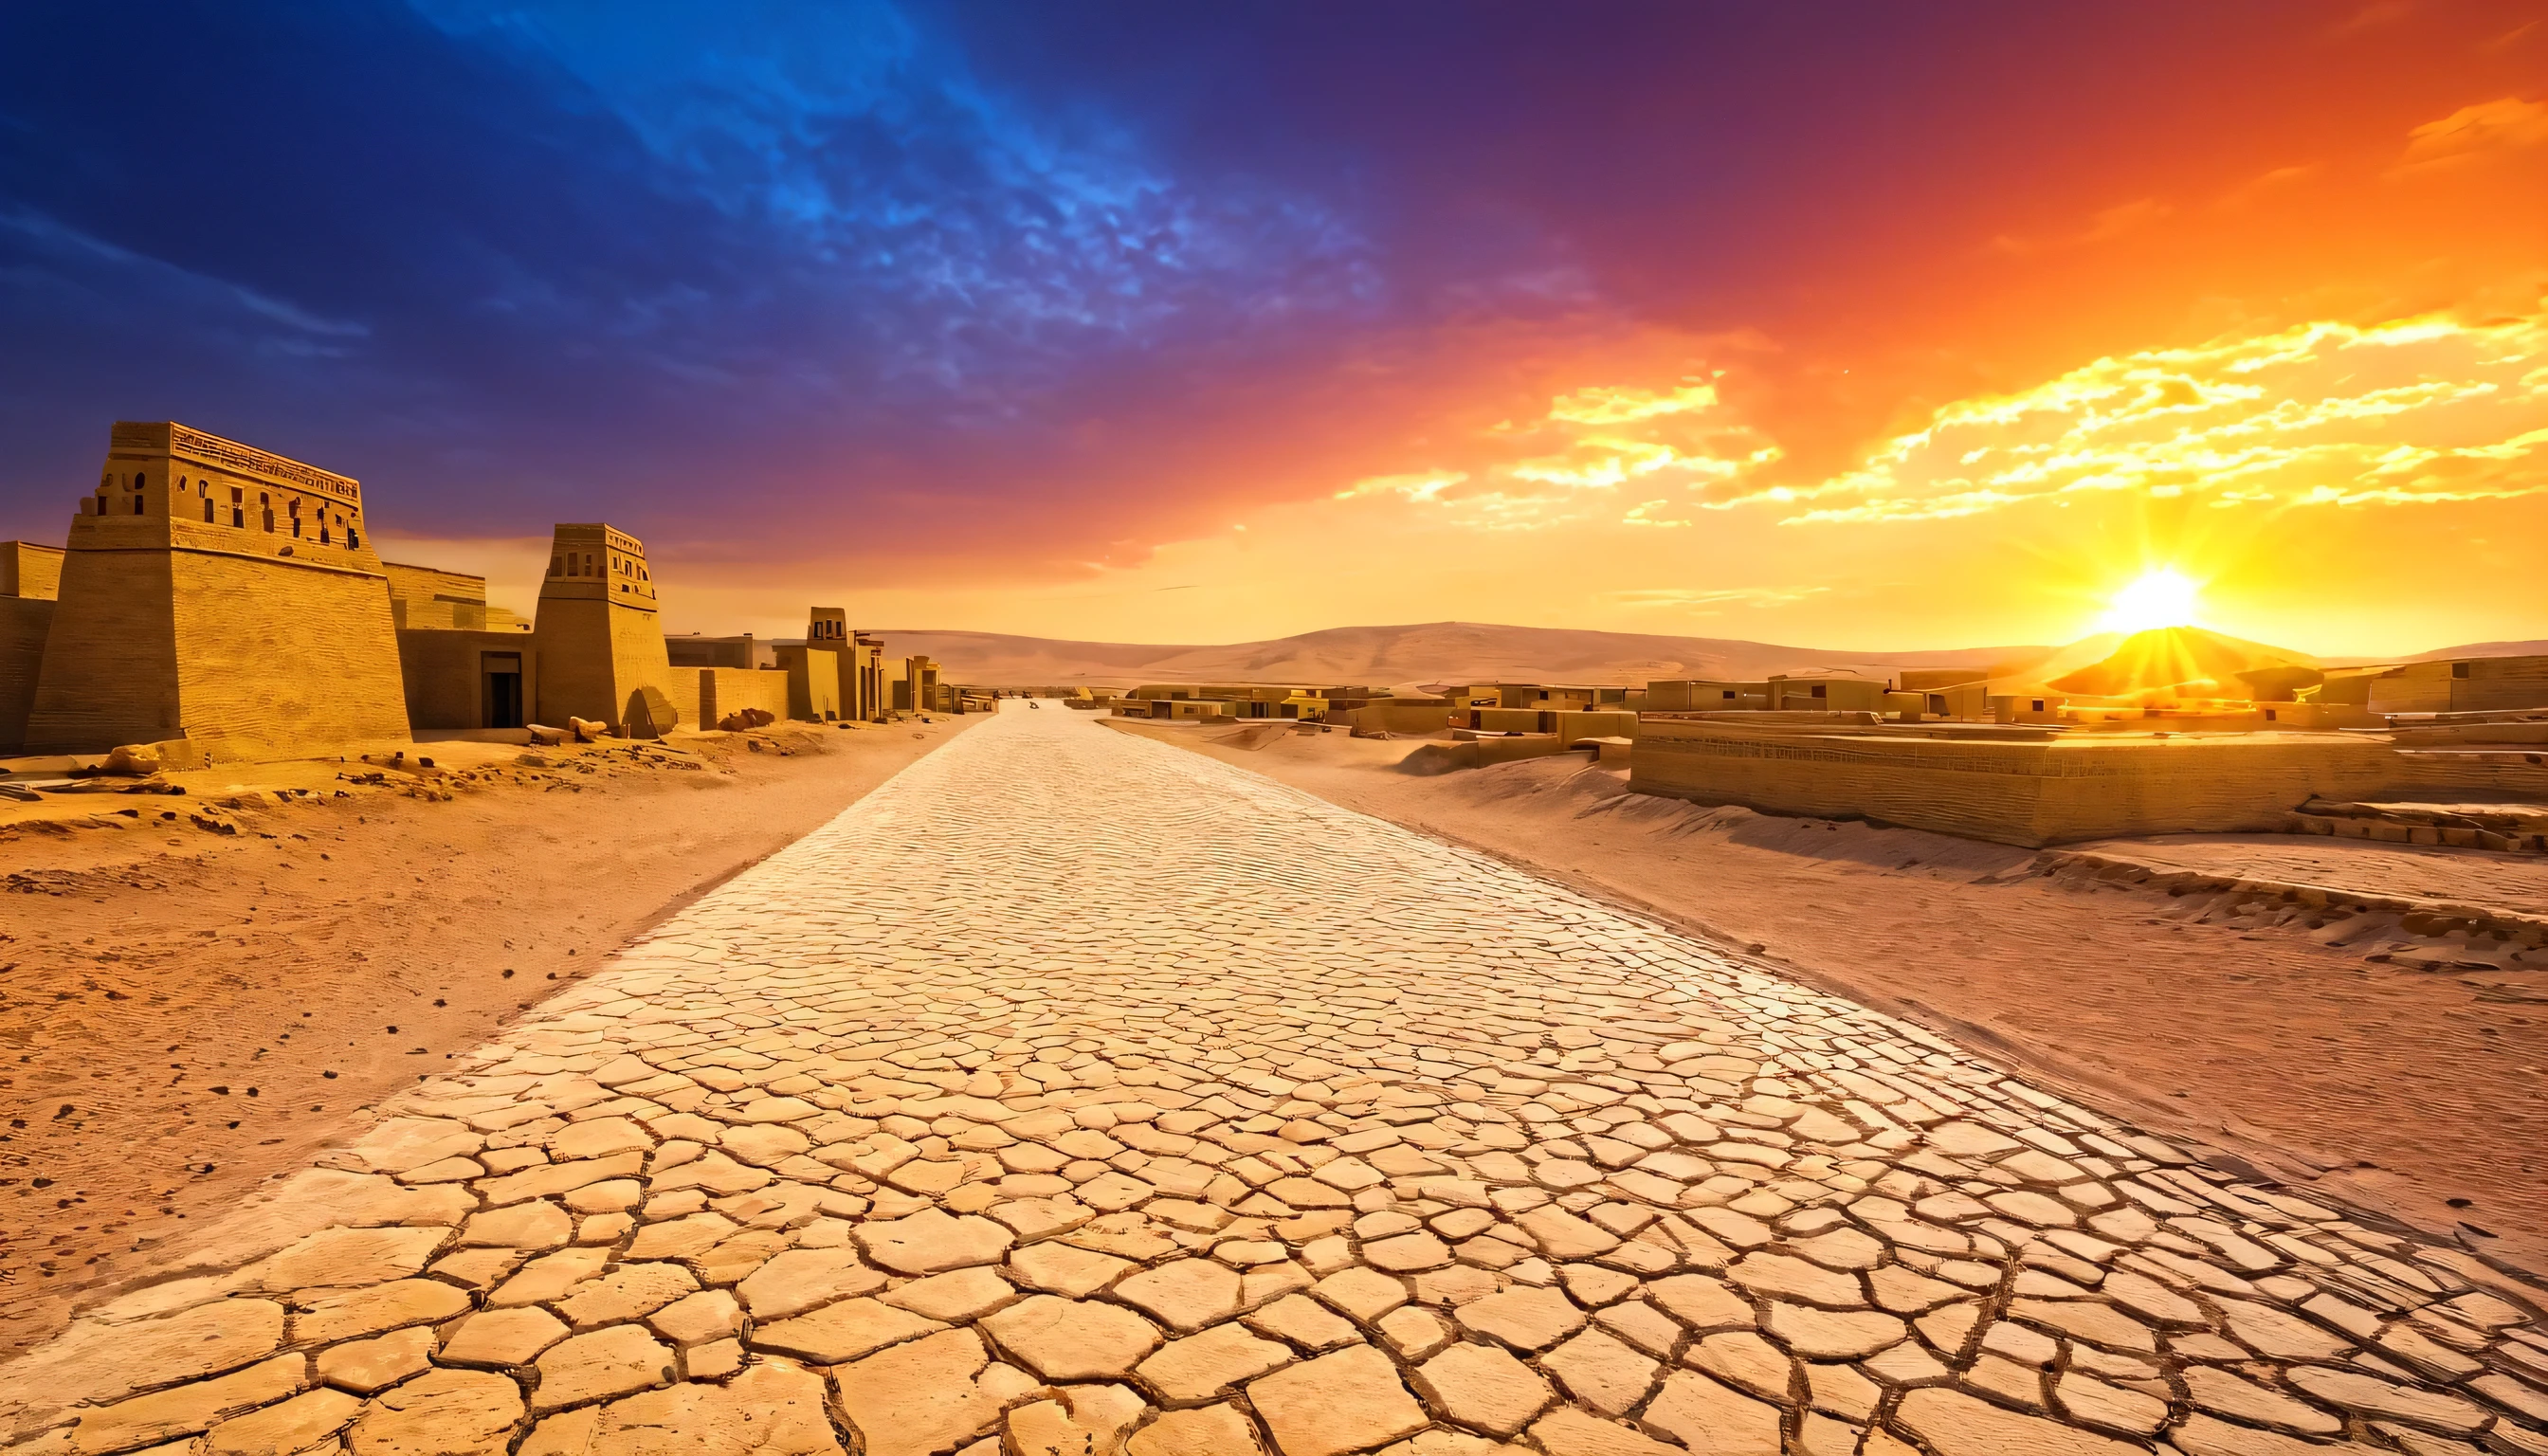 ancient Sumerian City, scenery, beautiful sky, sunset, outdoors, desert, buildings, cloudy sky, road